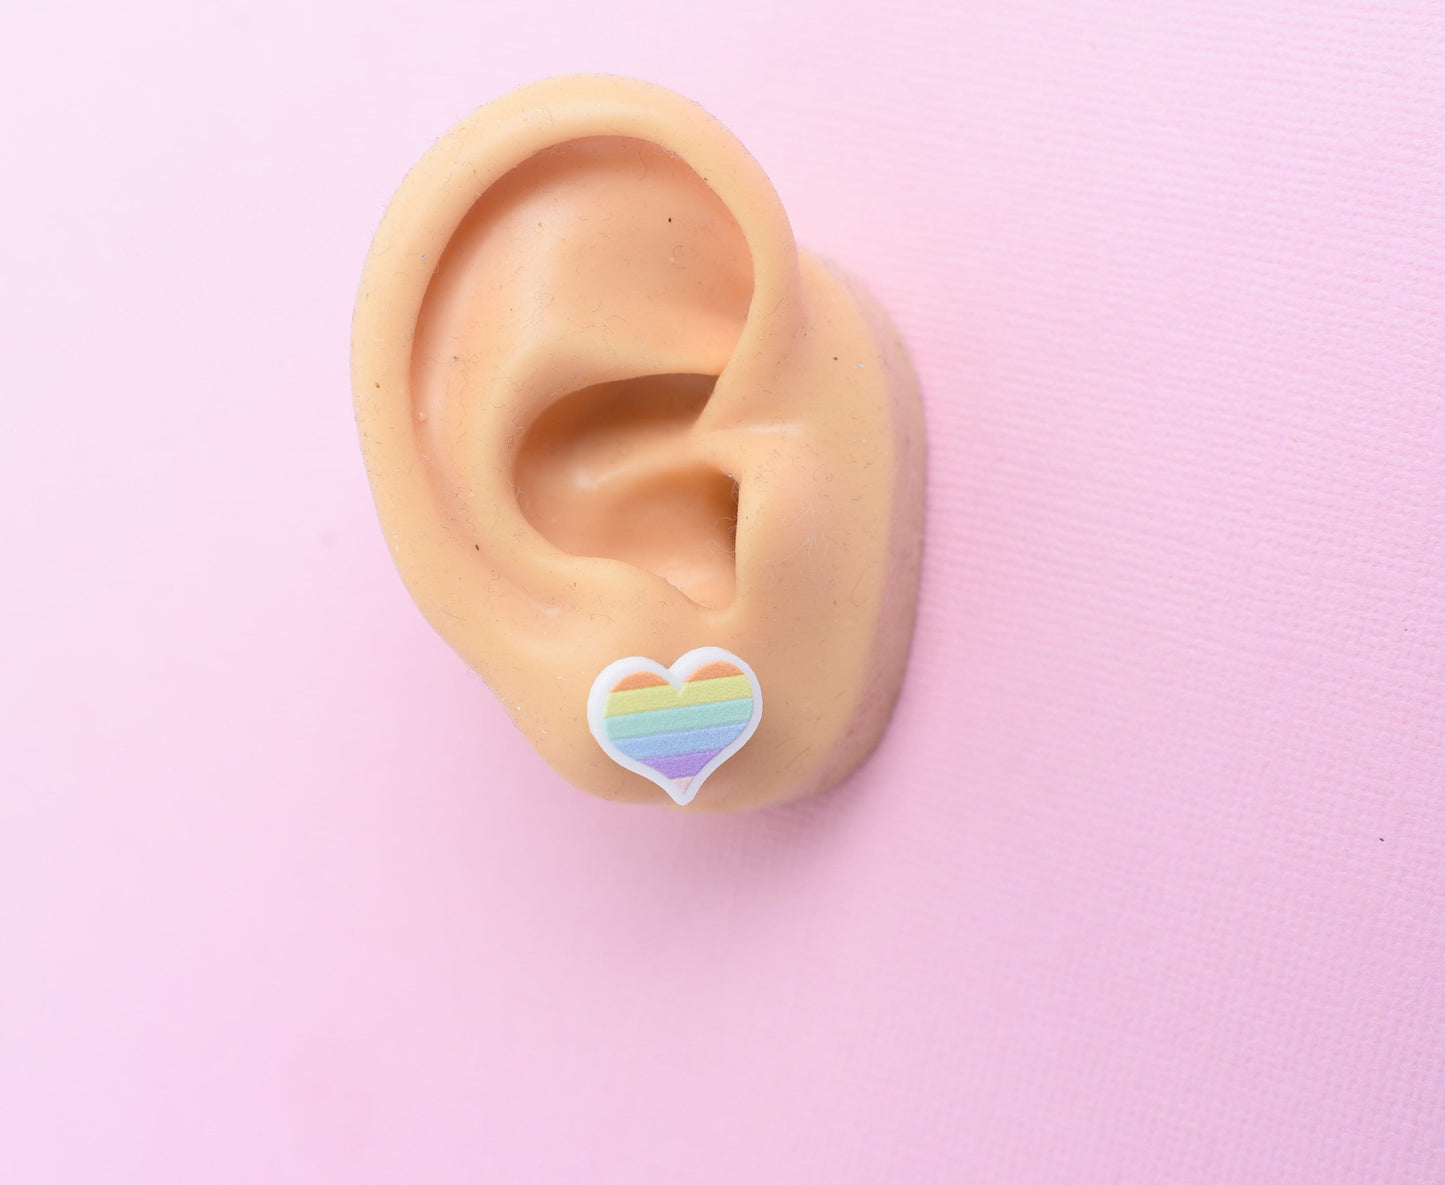 Pastel Rainbow Heart Earrings with Titanium Posts